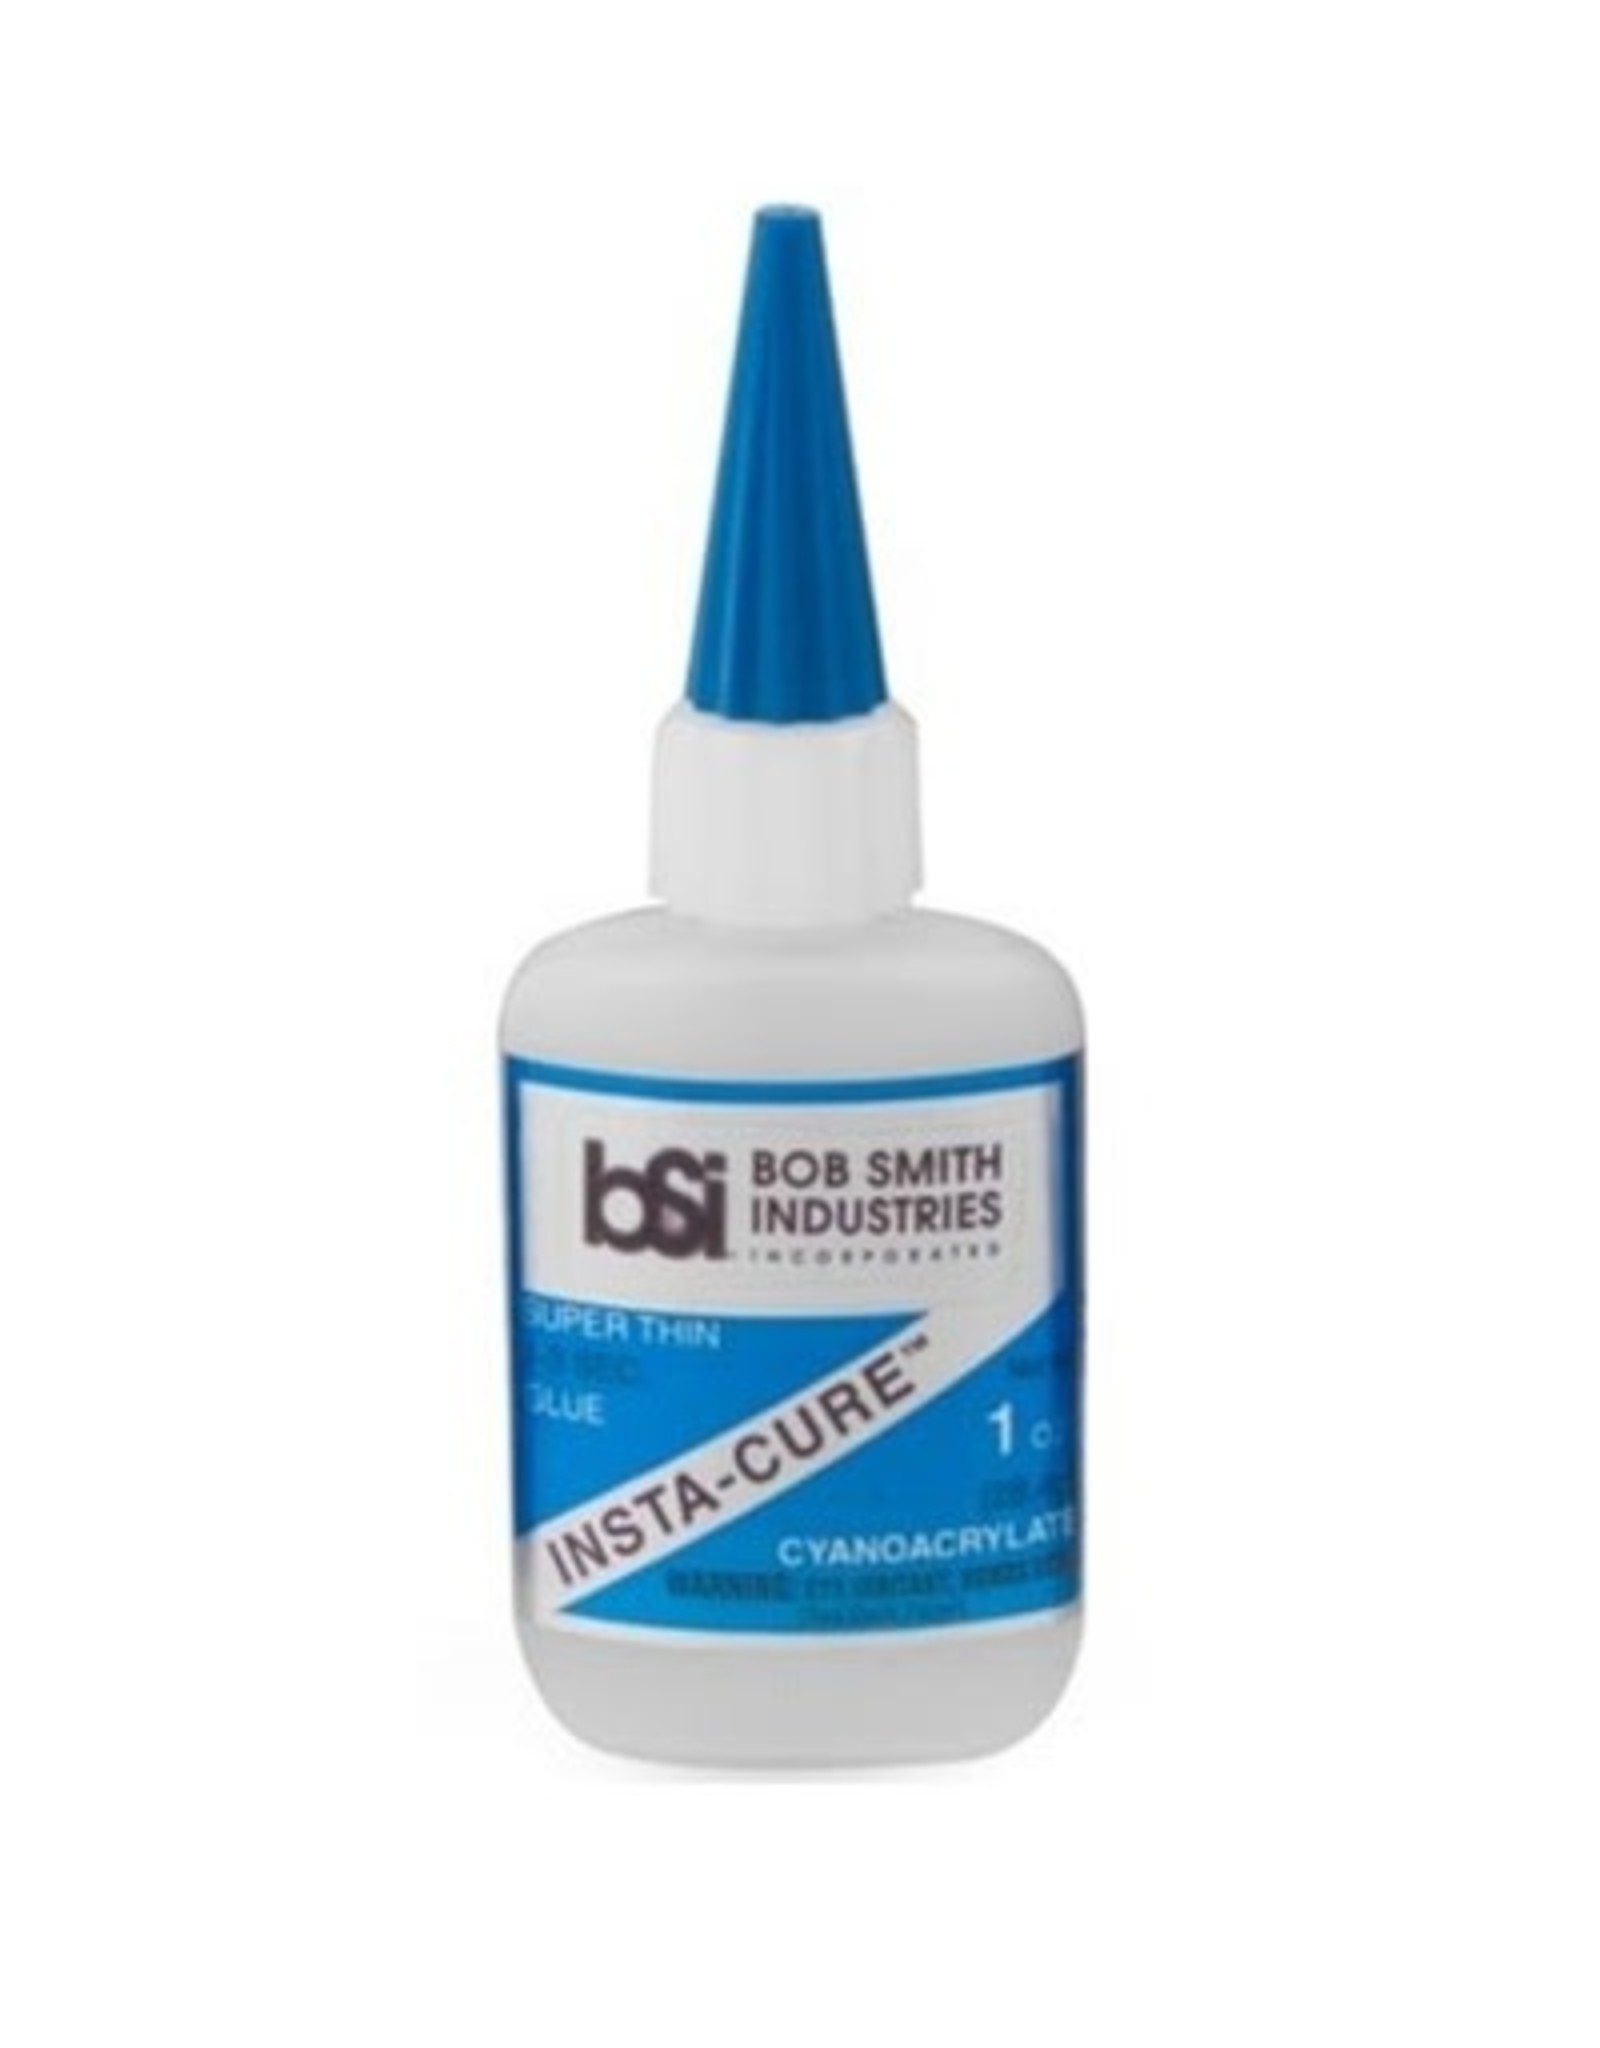 Bob Smith Industries Cyanoacrylate Thin Glue 1 oz.